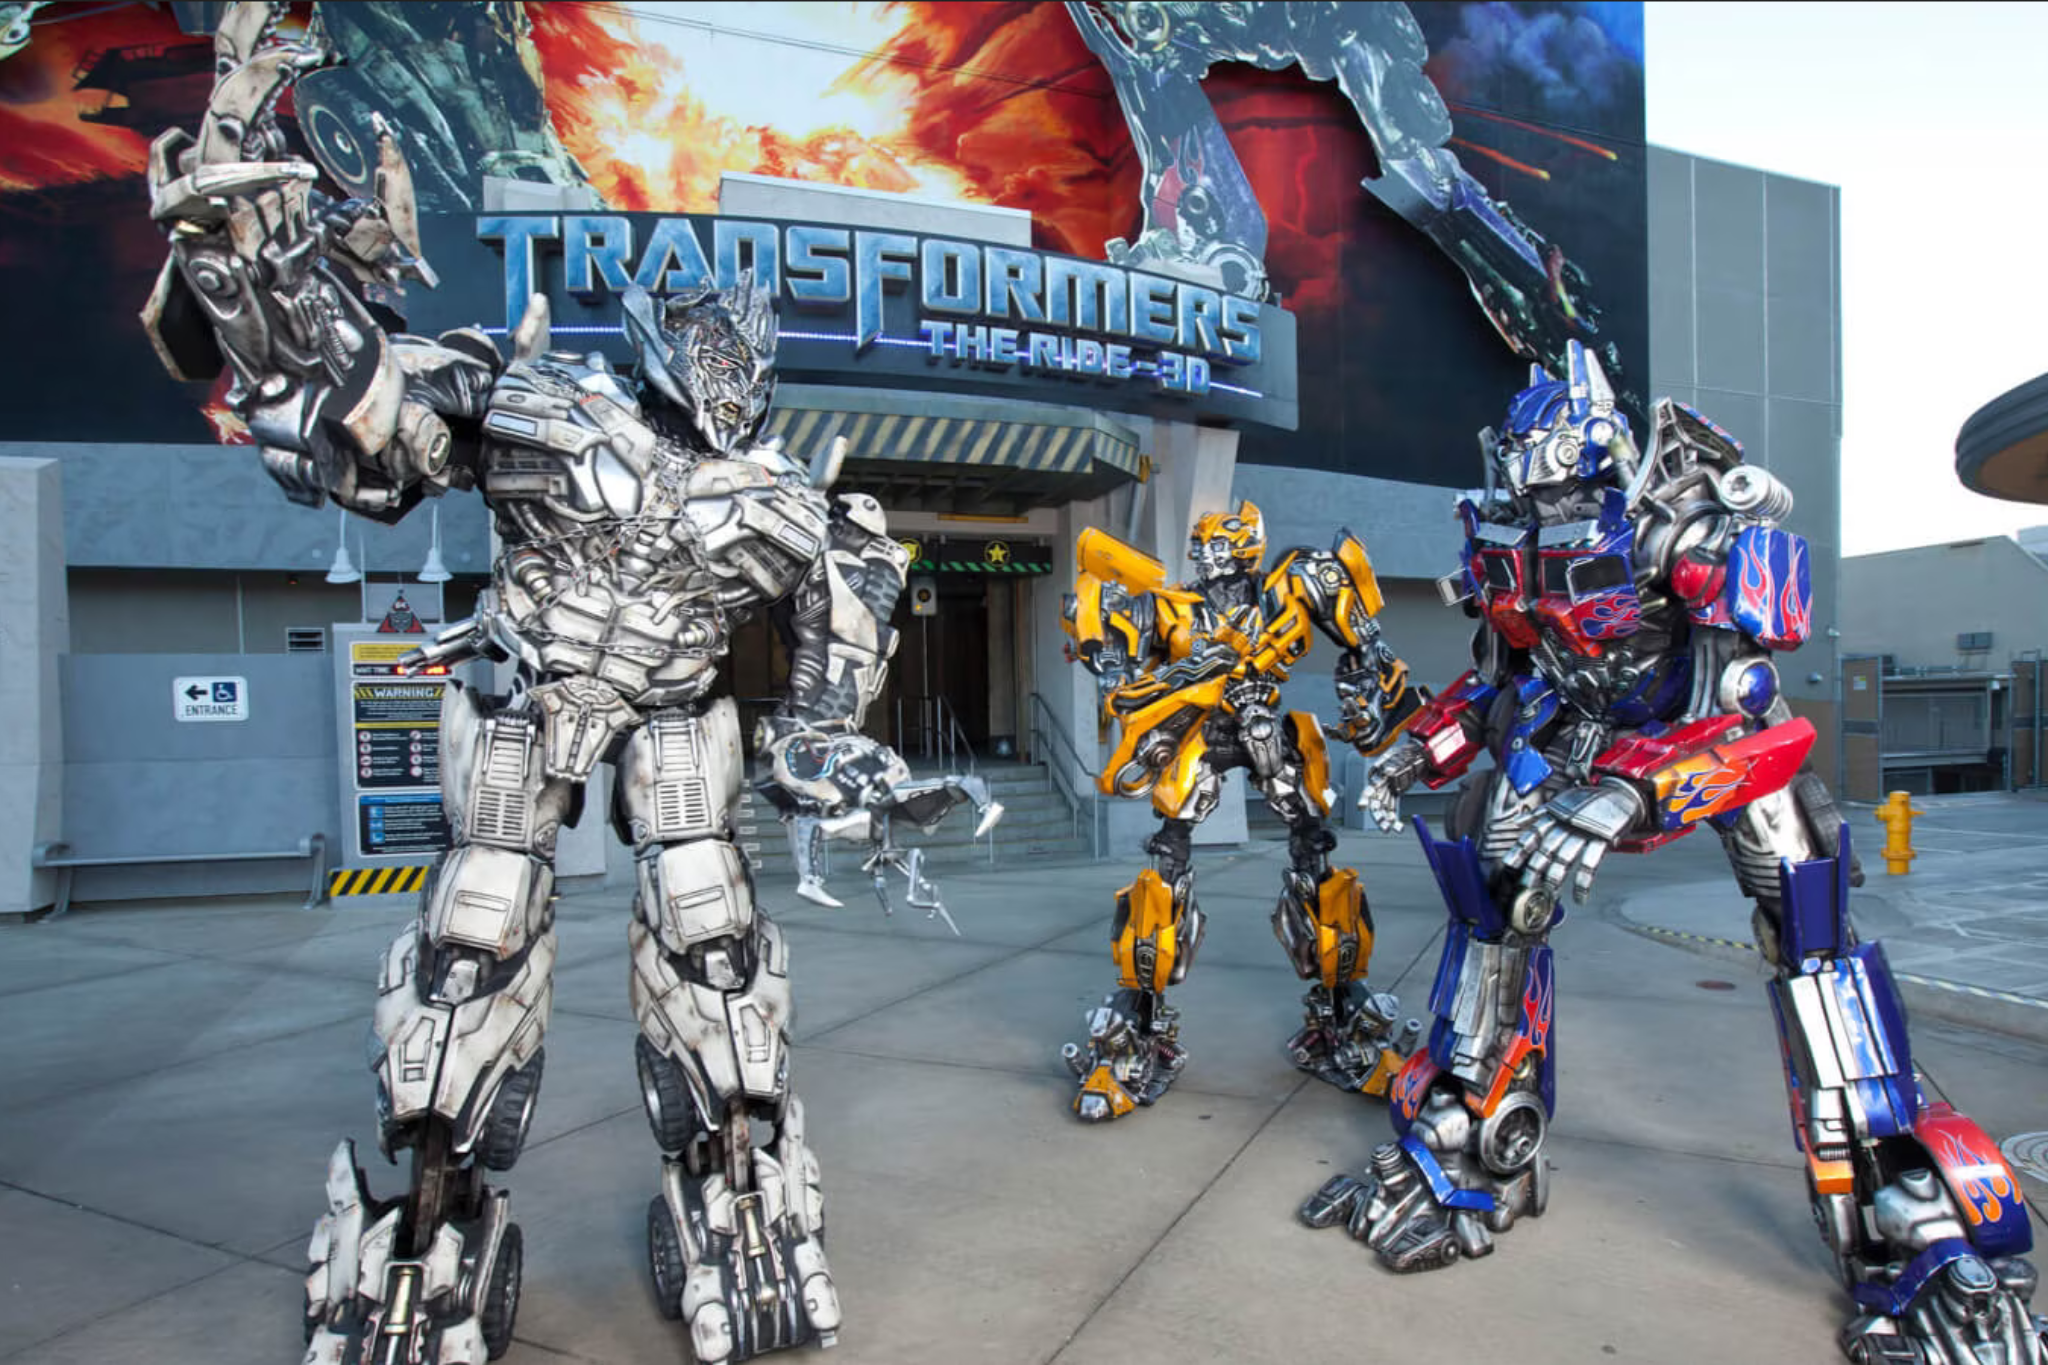 Transformers a Universal Studios Hollywood